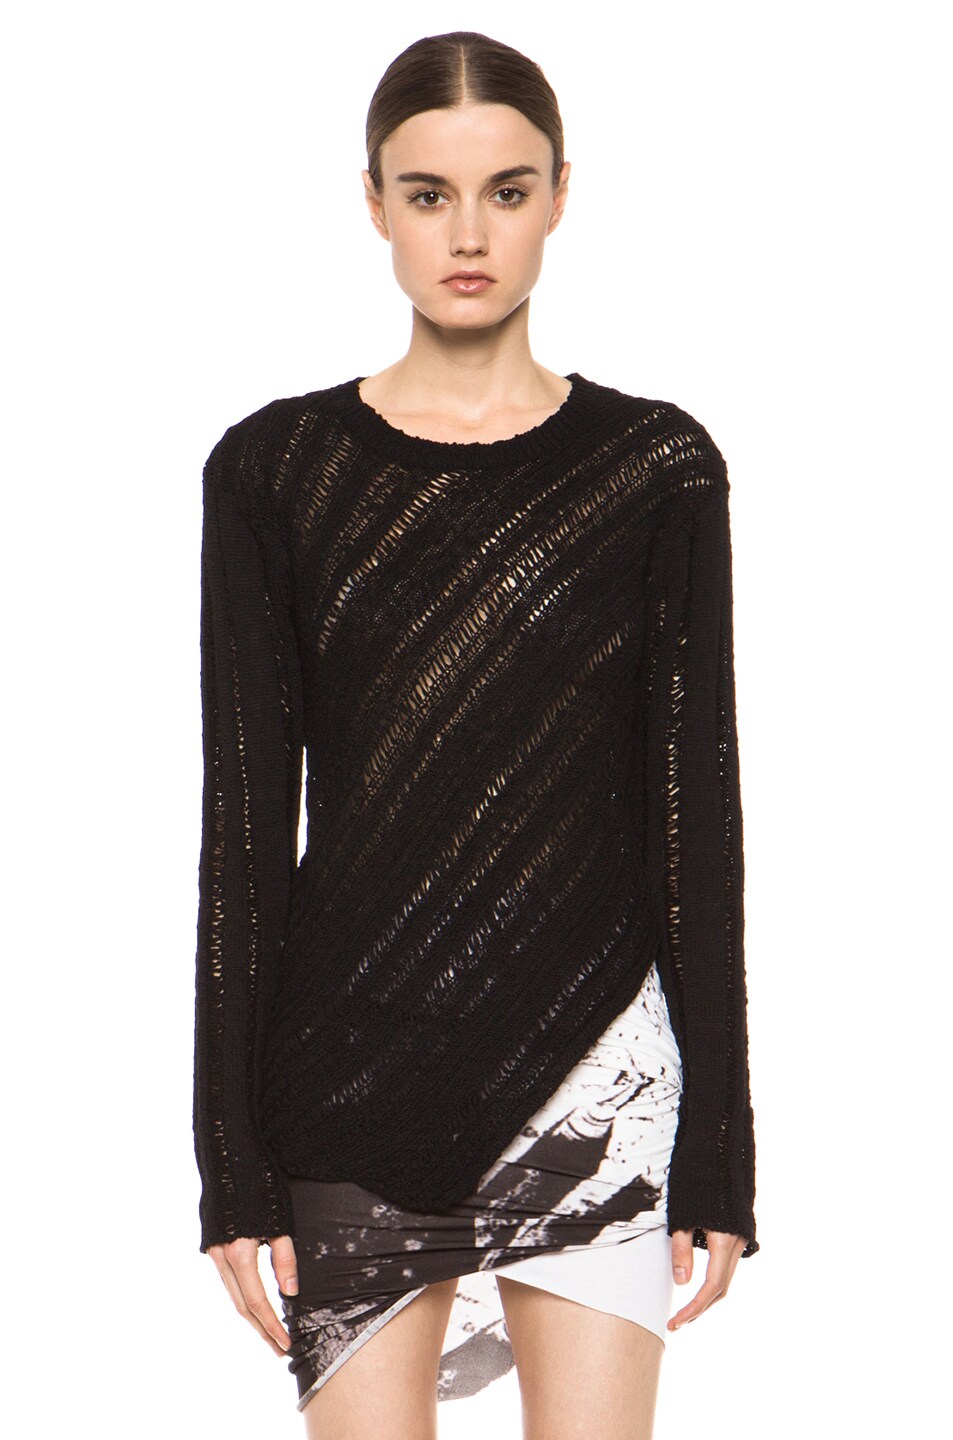 Kimberly Ovitz Asii Sweater in Black | FWRD